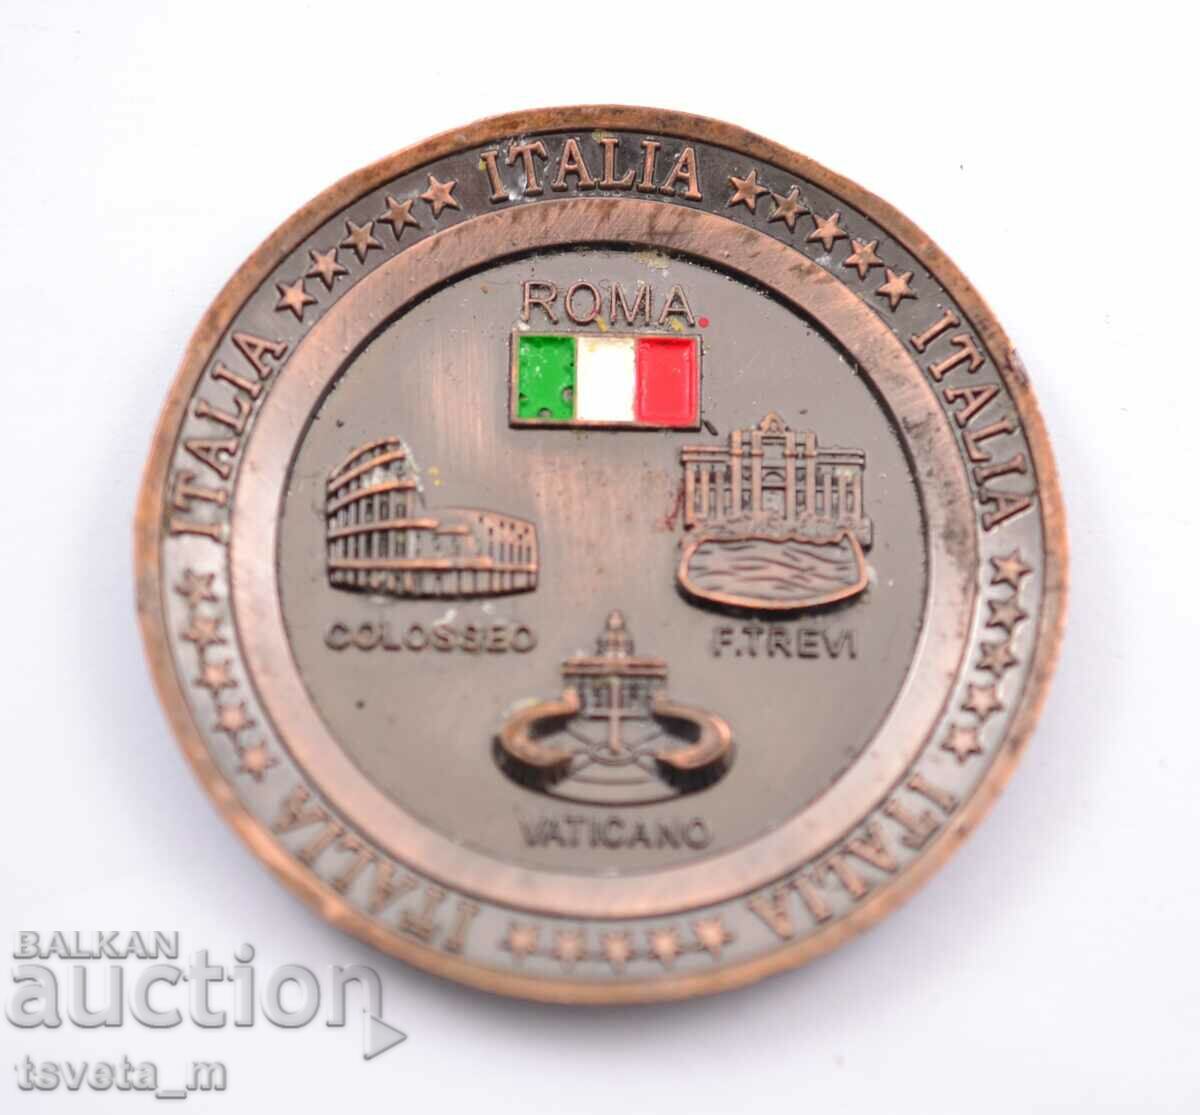 Small metal saucer, souvenir Italy